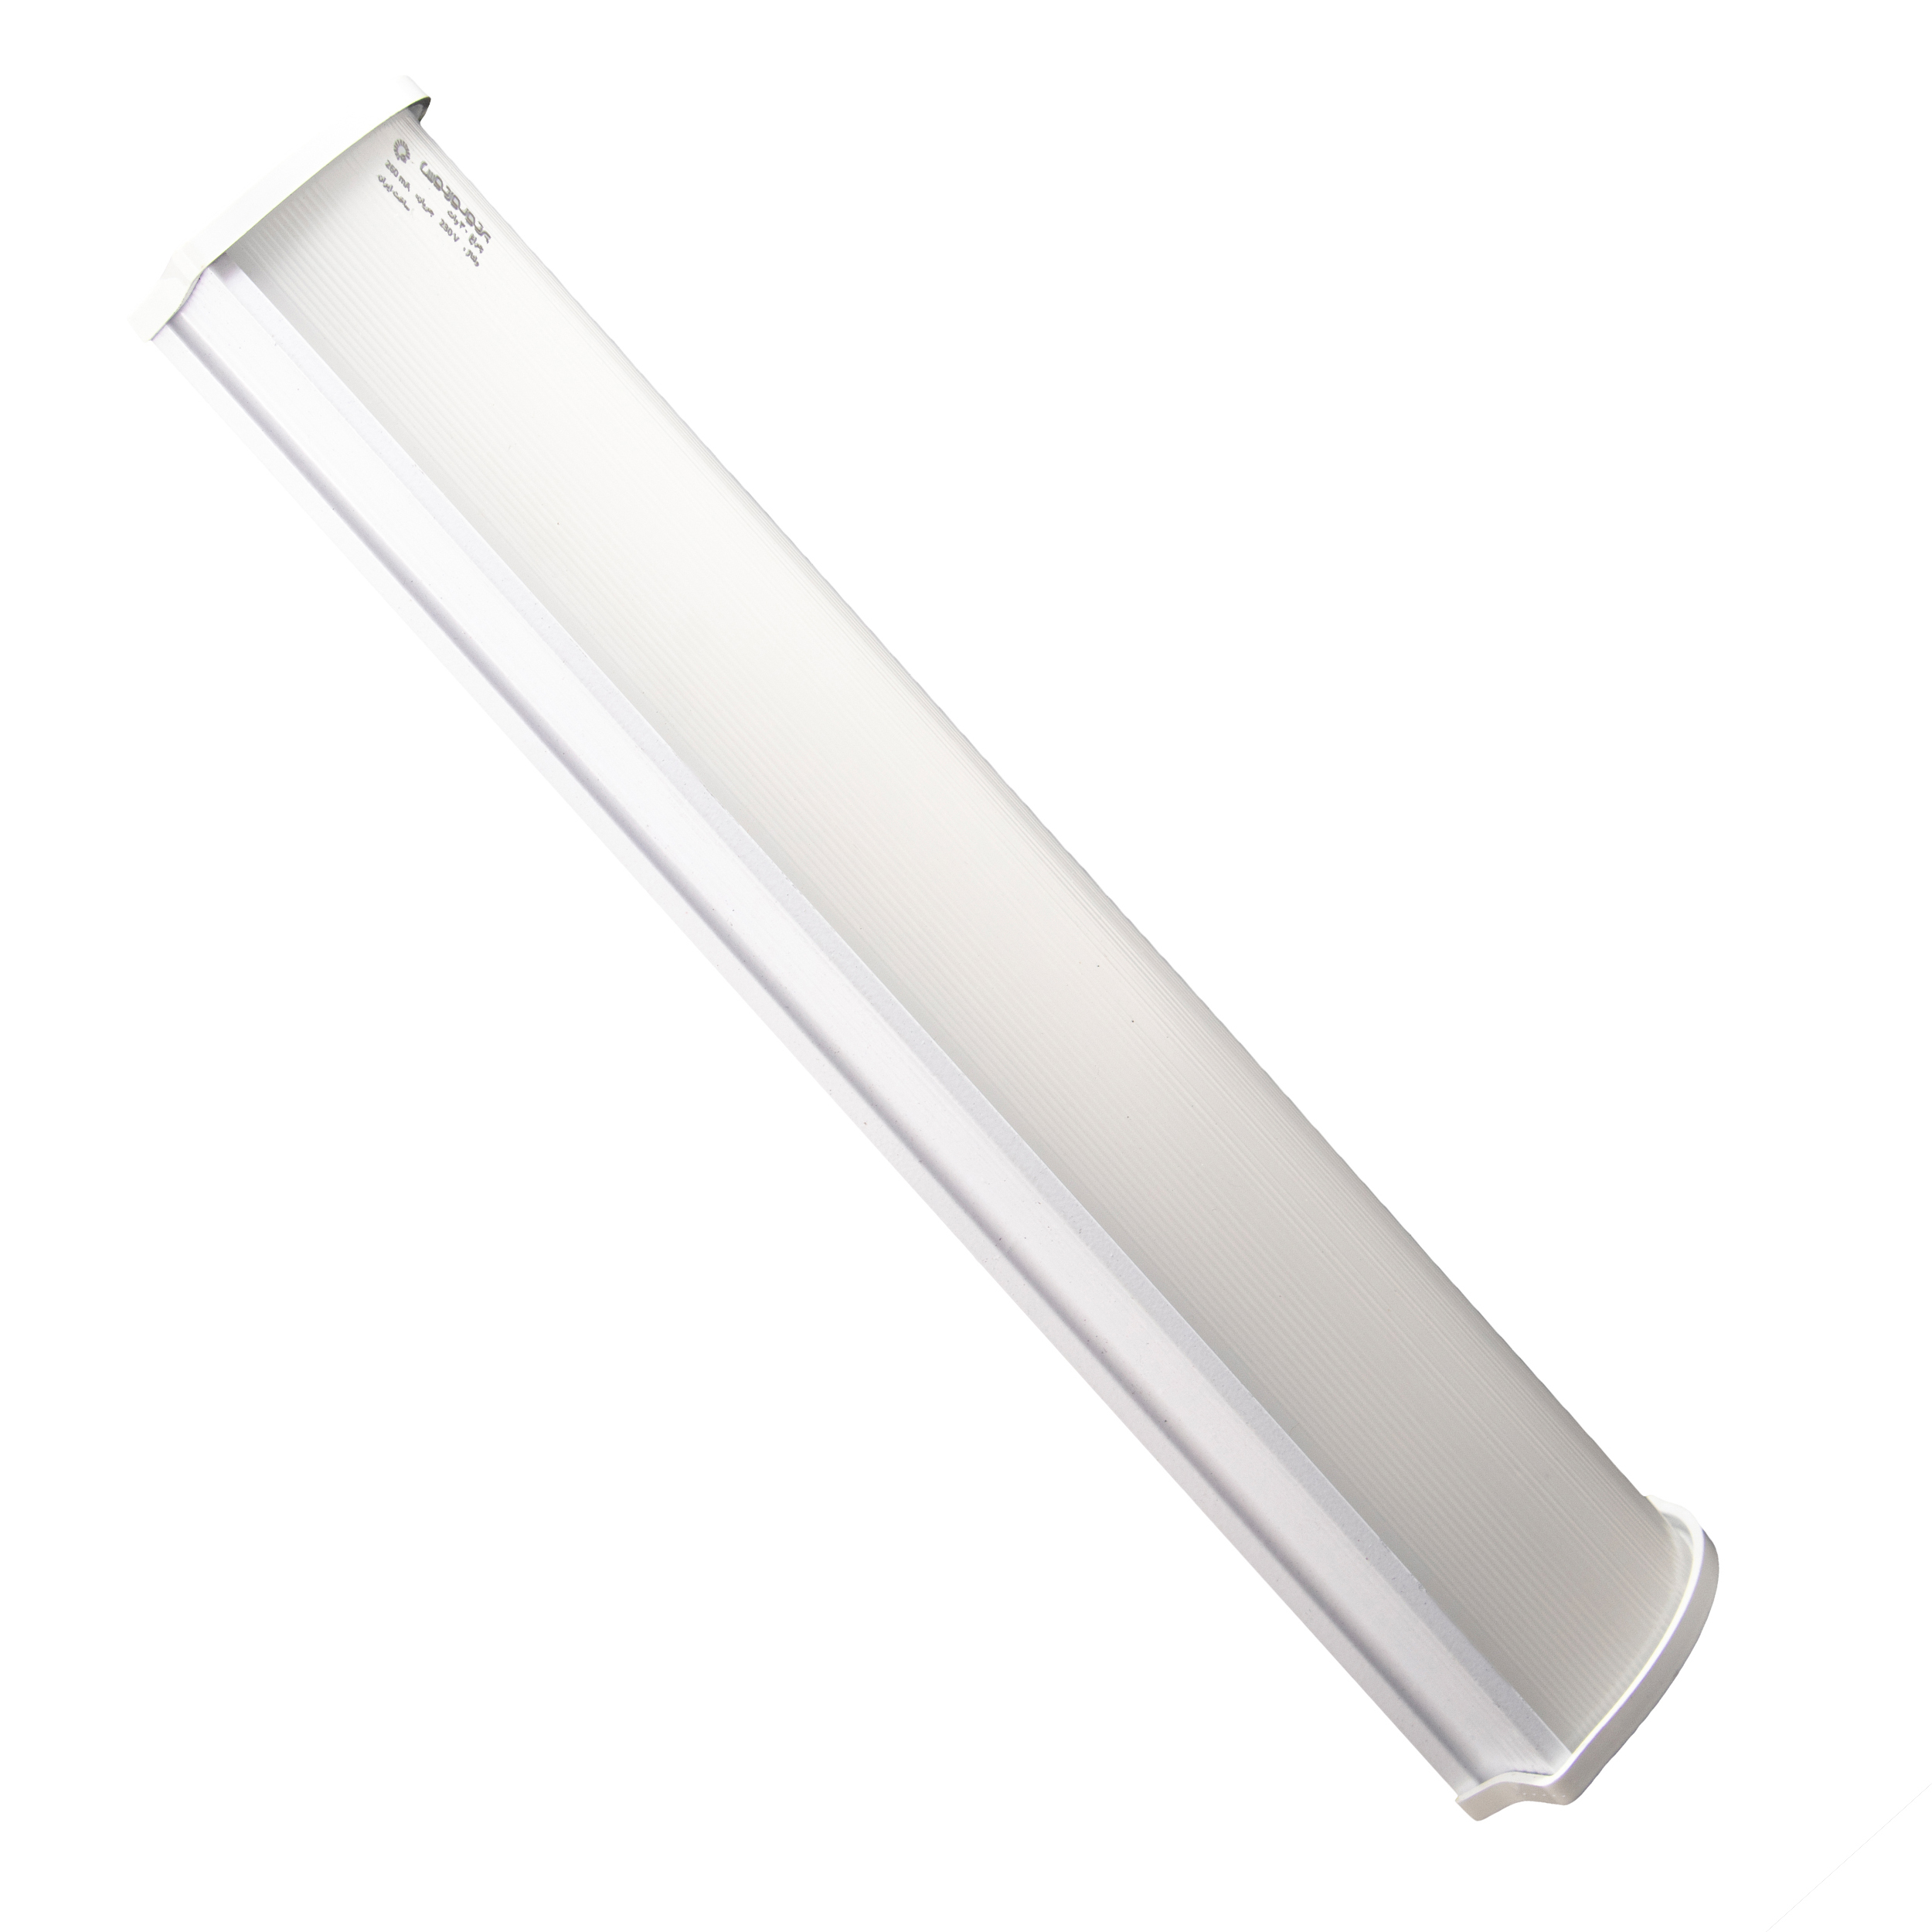   لامپ خطی 20 وات پرتو نور توس مدل آران دیواری